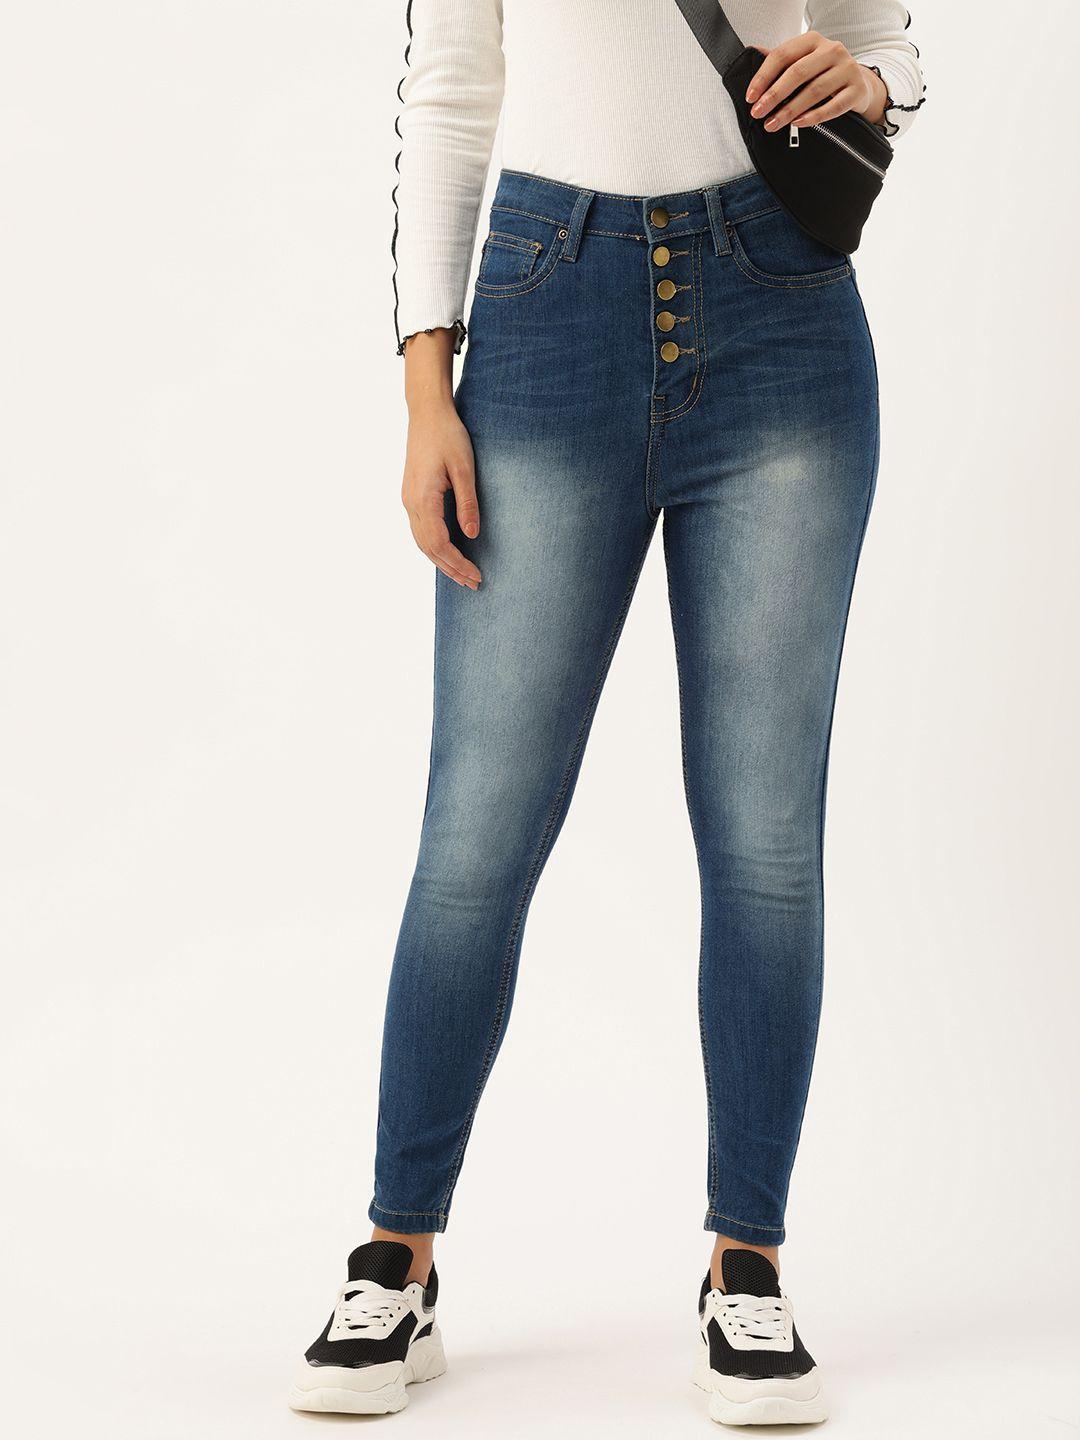 kook n keech women navy blue slim fit high-rise heavy fade stretchable jeans